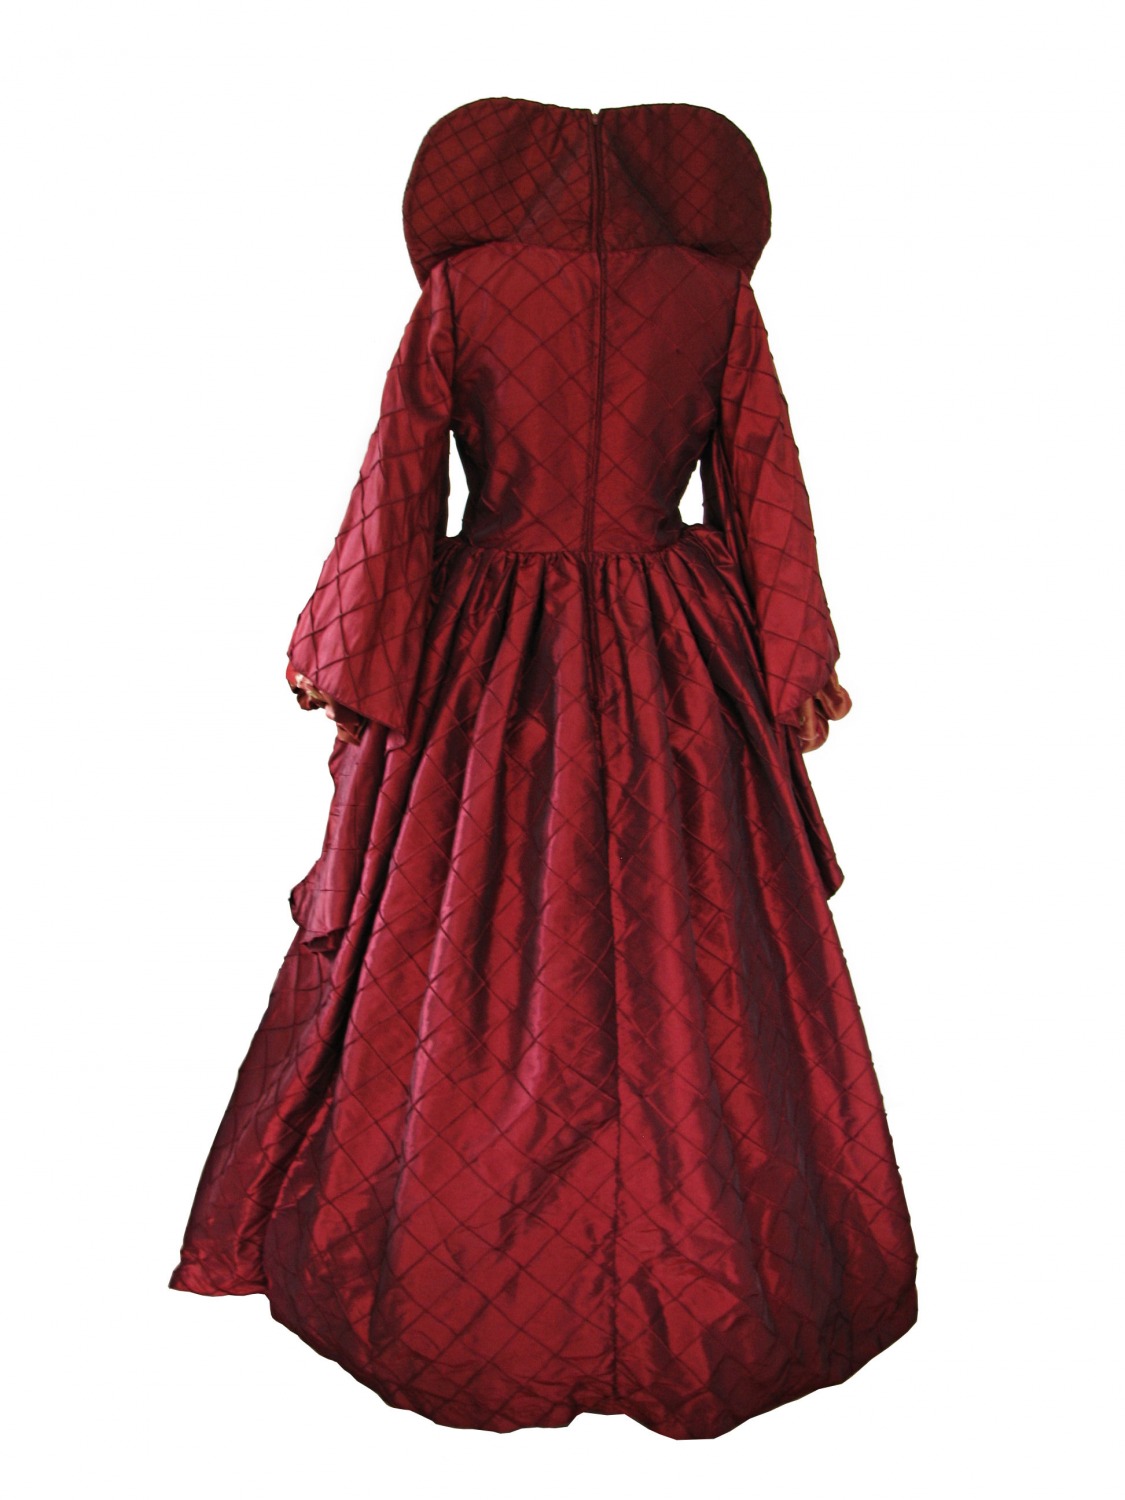 Deluxe Ladies Medieval Tudor Queen Elizabeth 1 Costume Size 10 - 12 Image